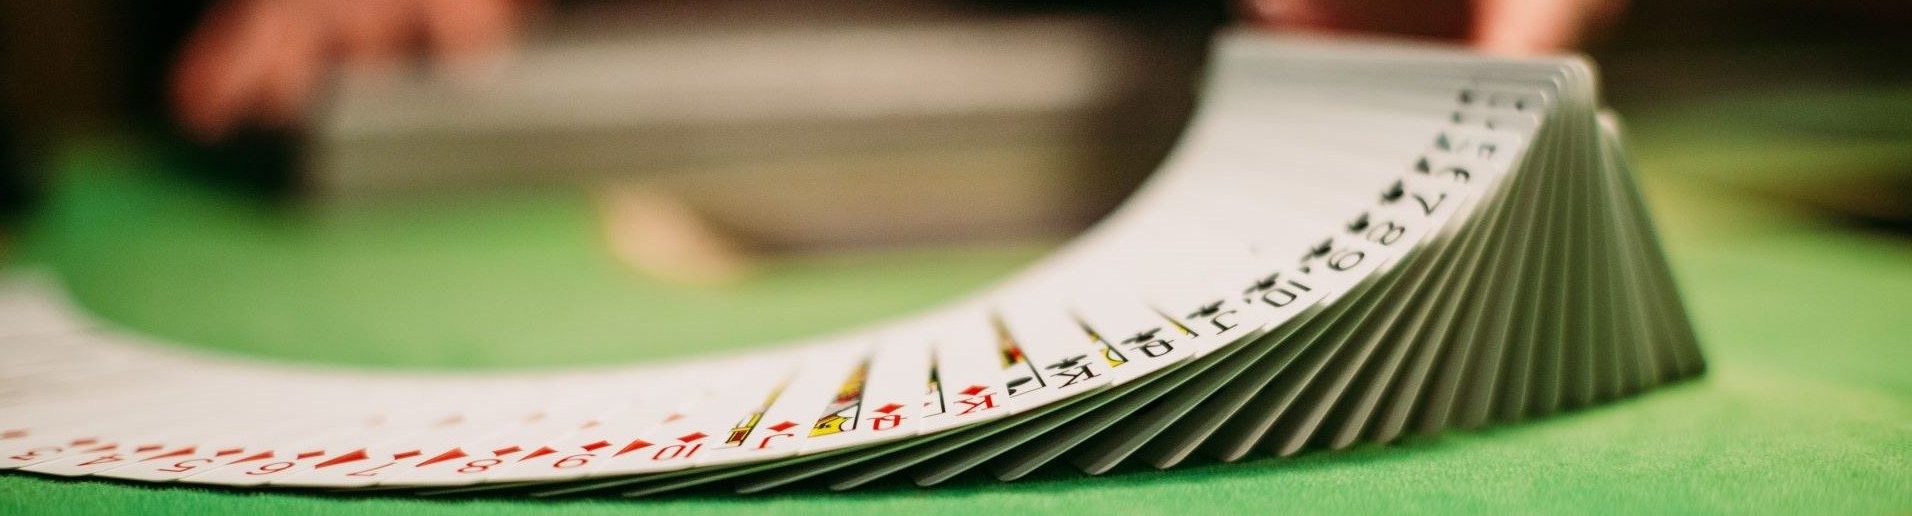 How to Play Crazy 4 Poker - Resorts World Catskills